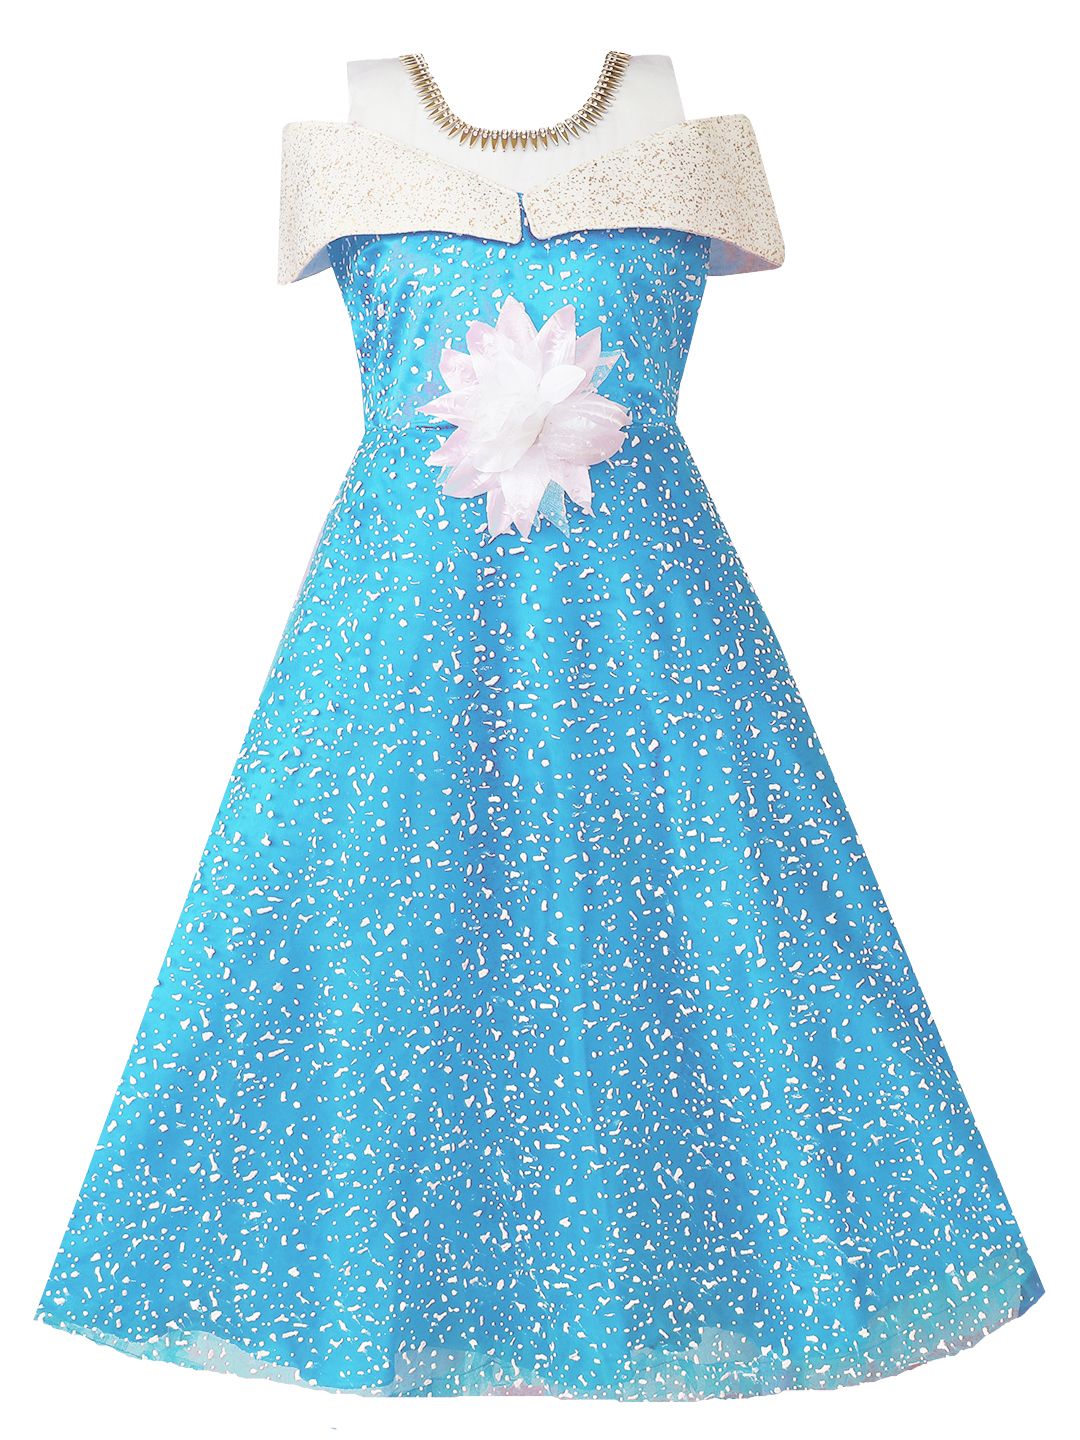 My Lil Princess Sky Blue Polka Dress Front View